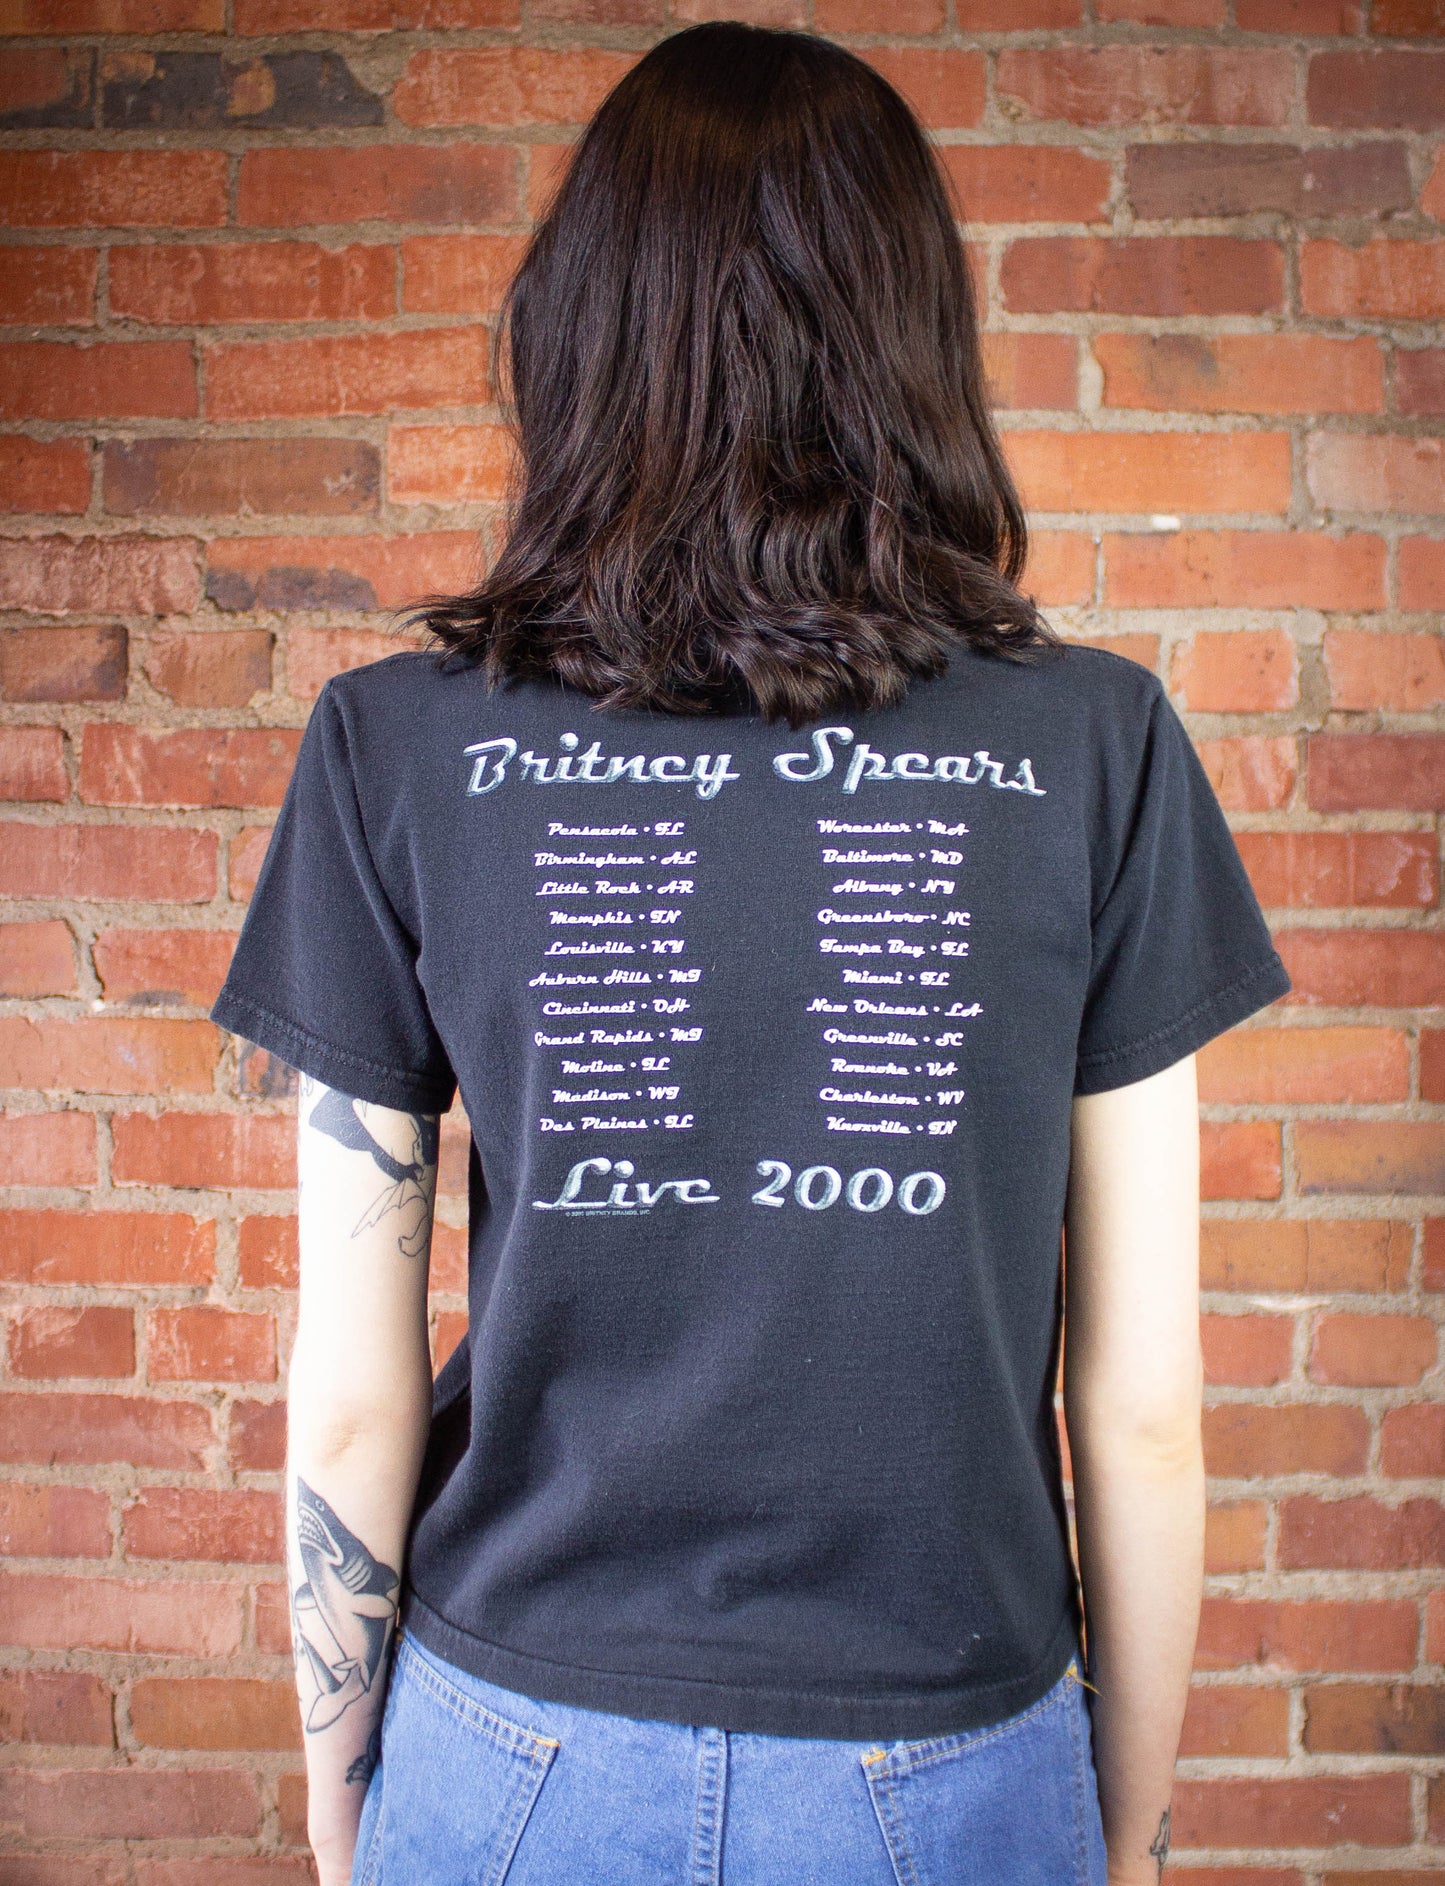 Vintage Britney Spears Concert T Shirt 2000 Live Black XS